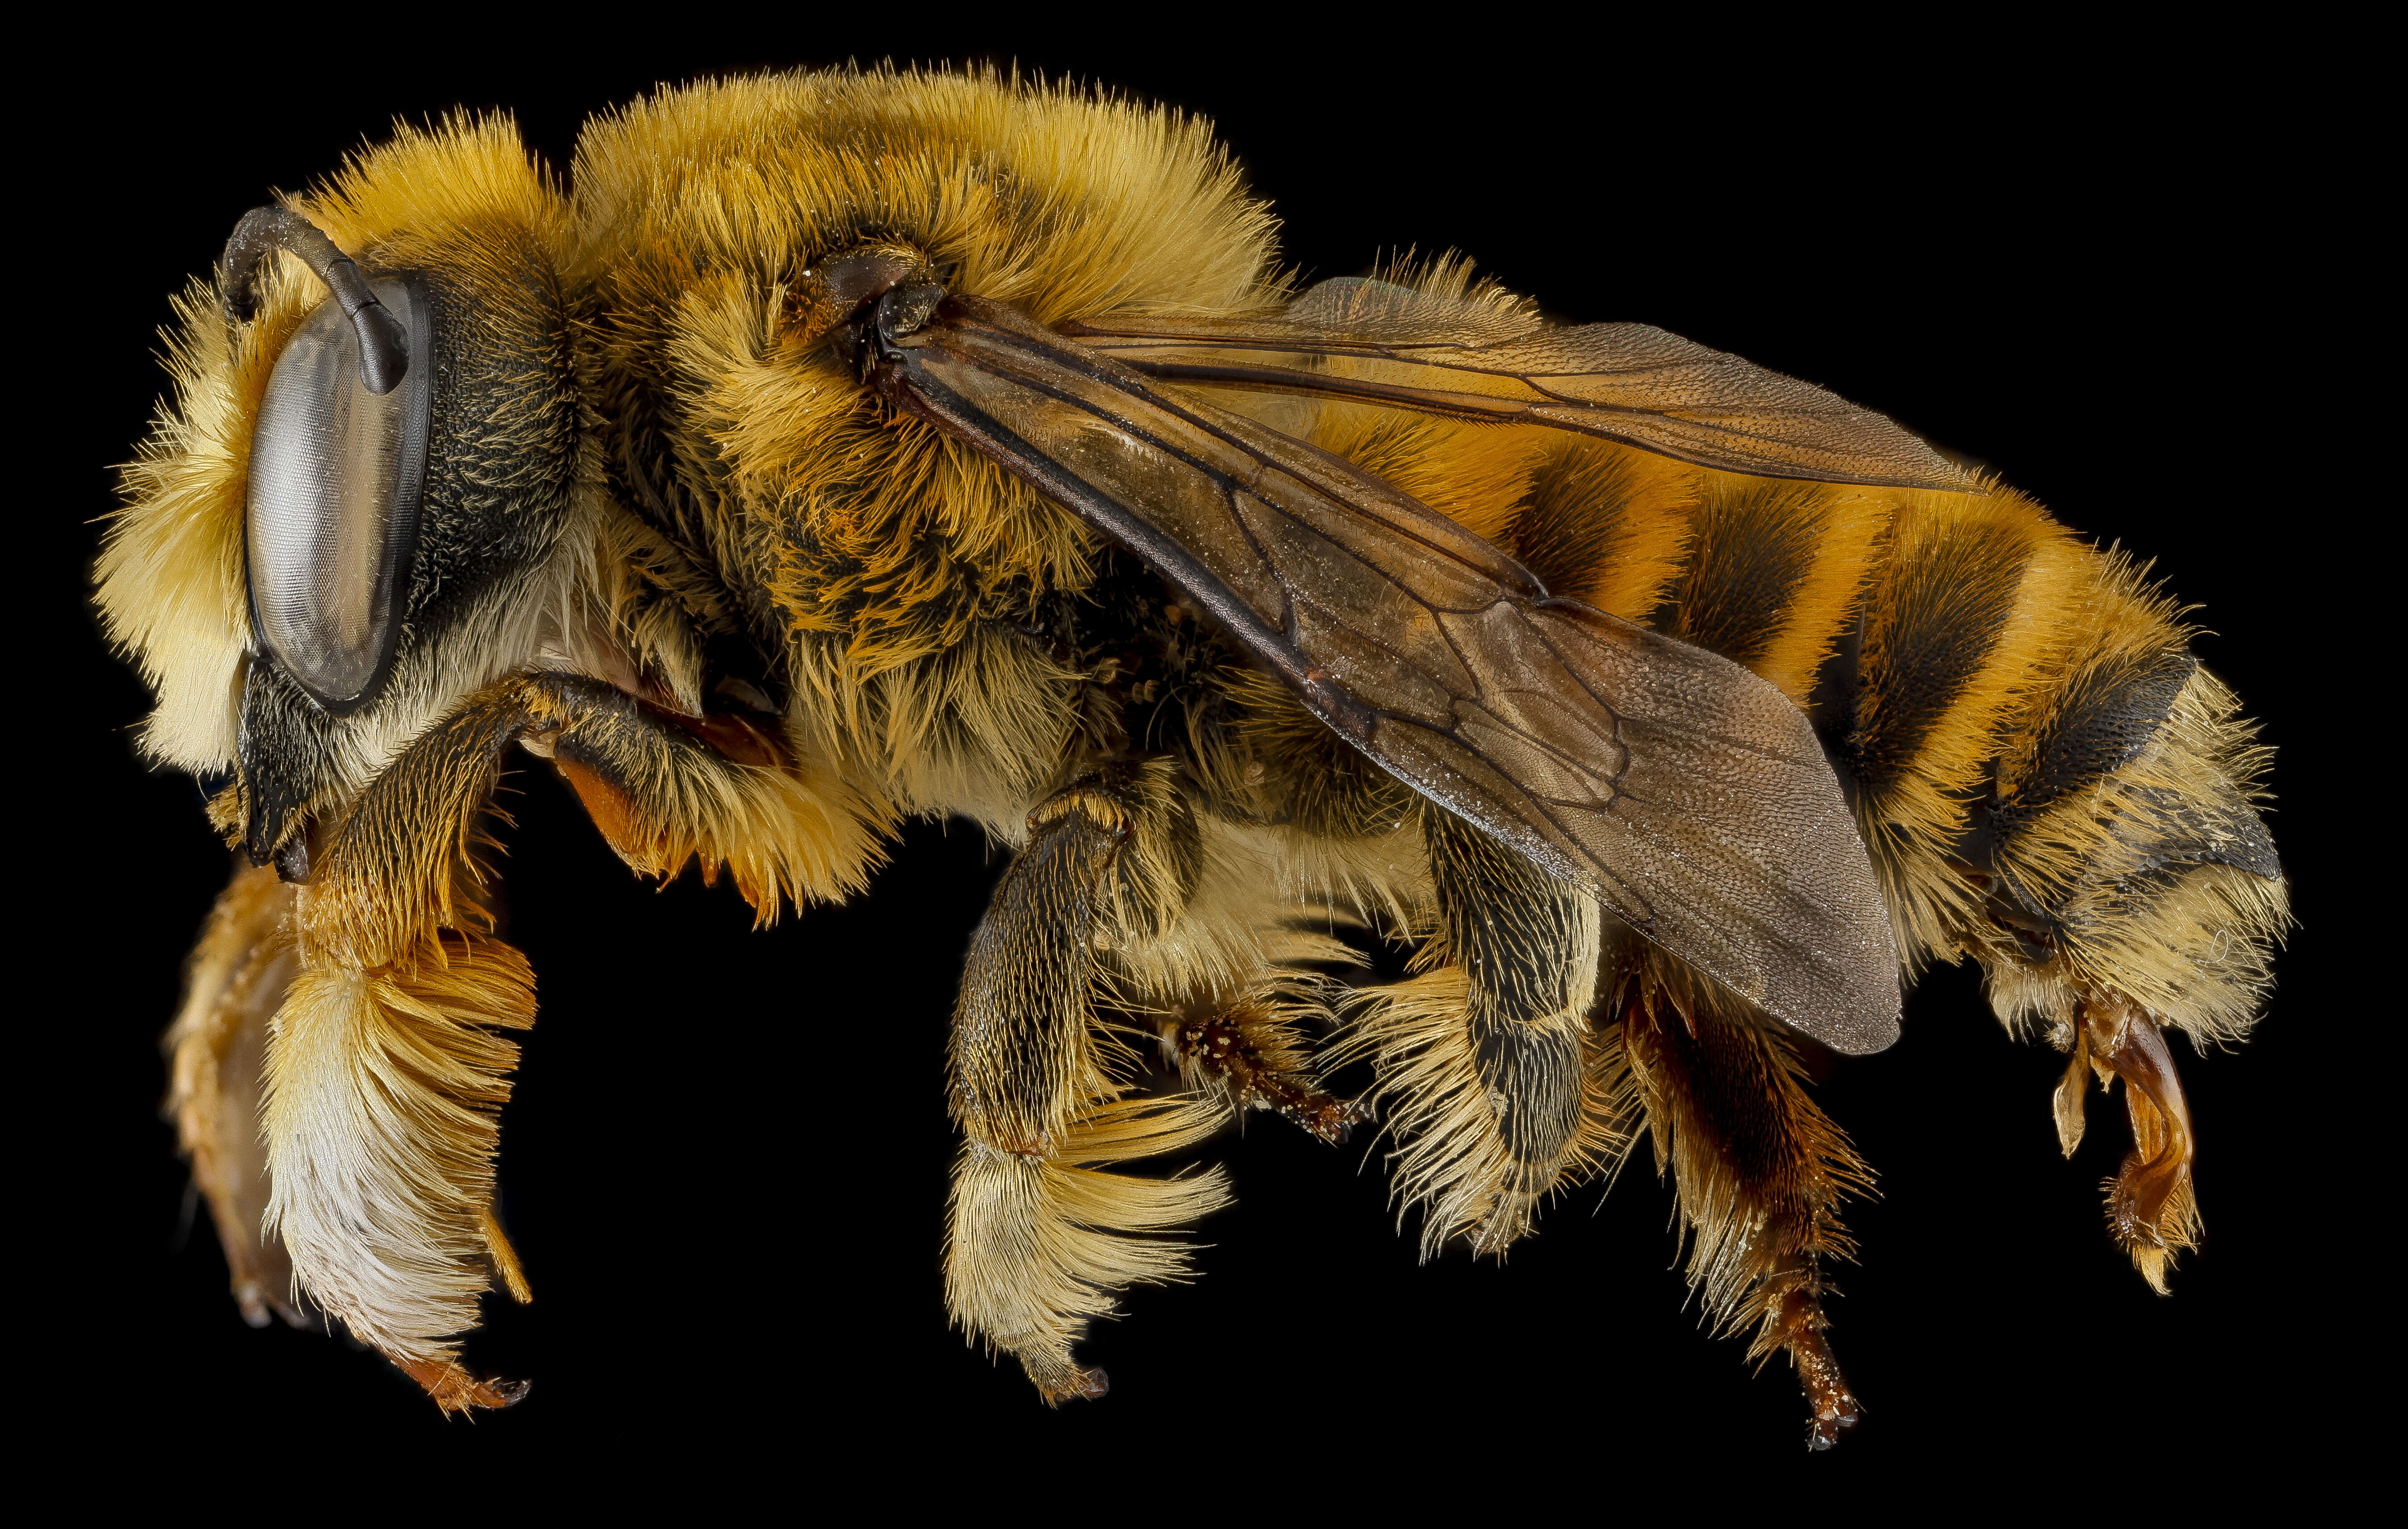 Image of Megachile fortis Cresson 1872